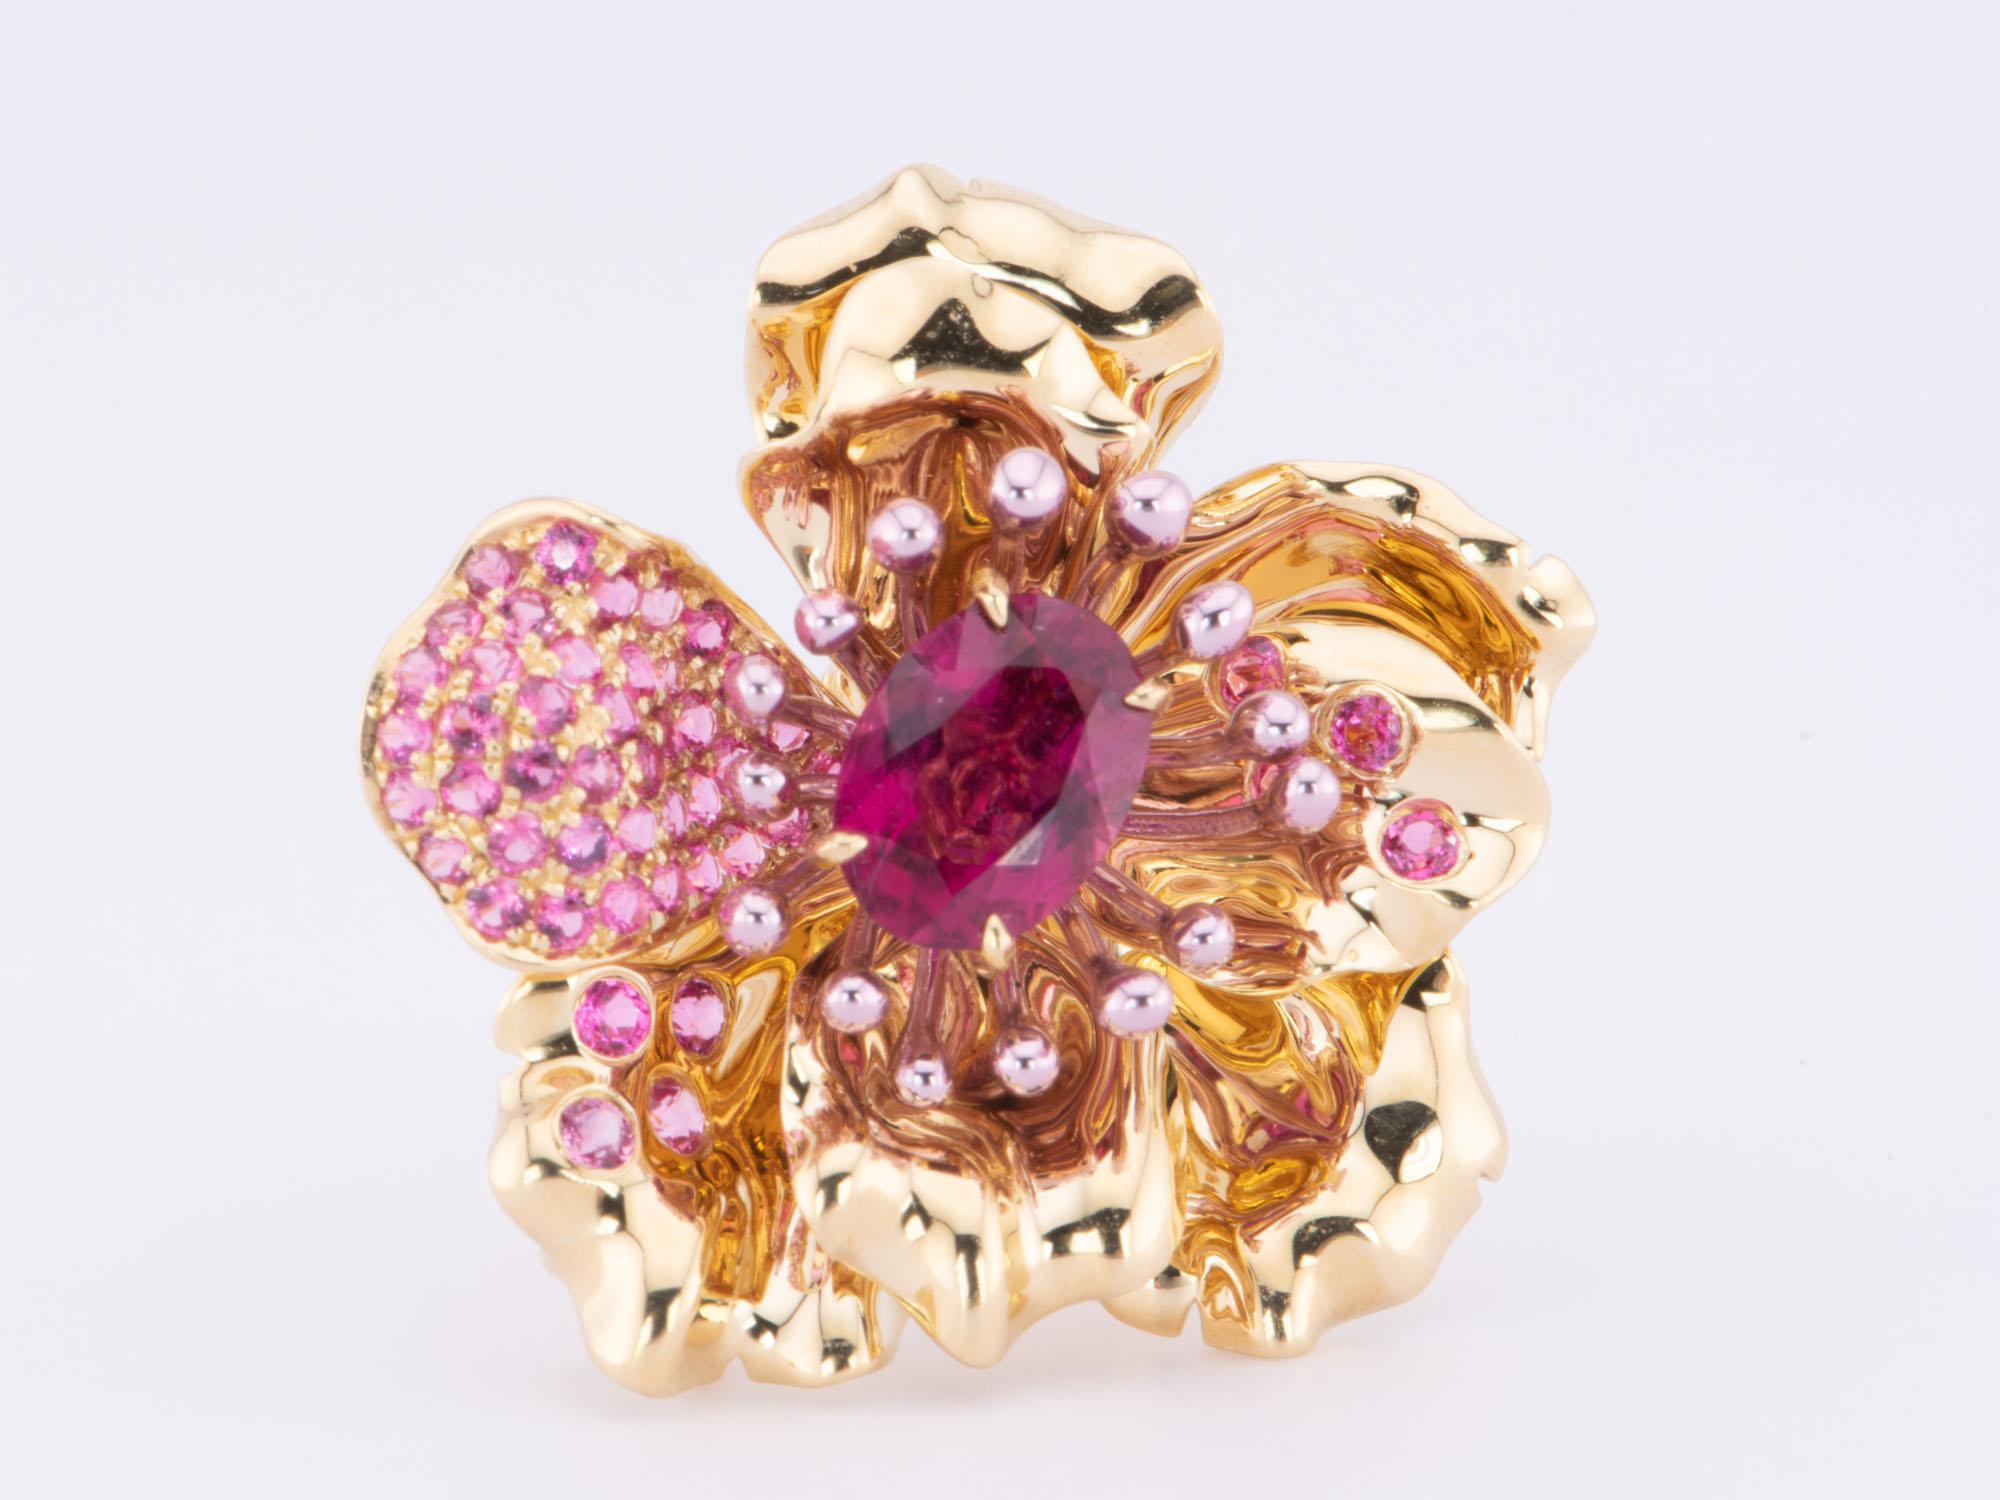 Women's or Men's Art Jewelry Rubellite Tourmaline Center Flower Ring / Pendant 18K Gold R6641 For Sale